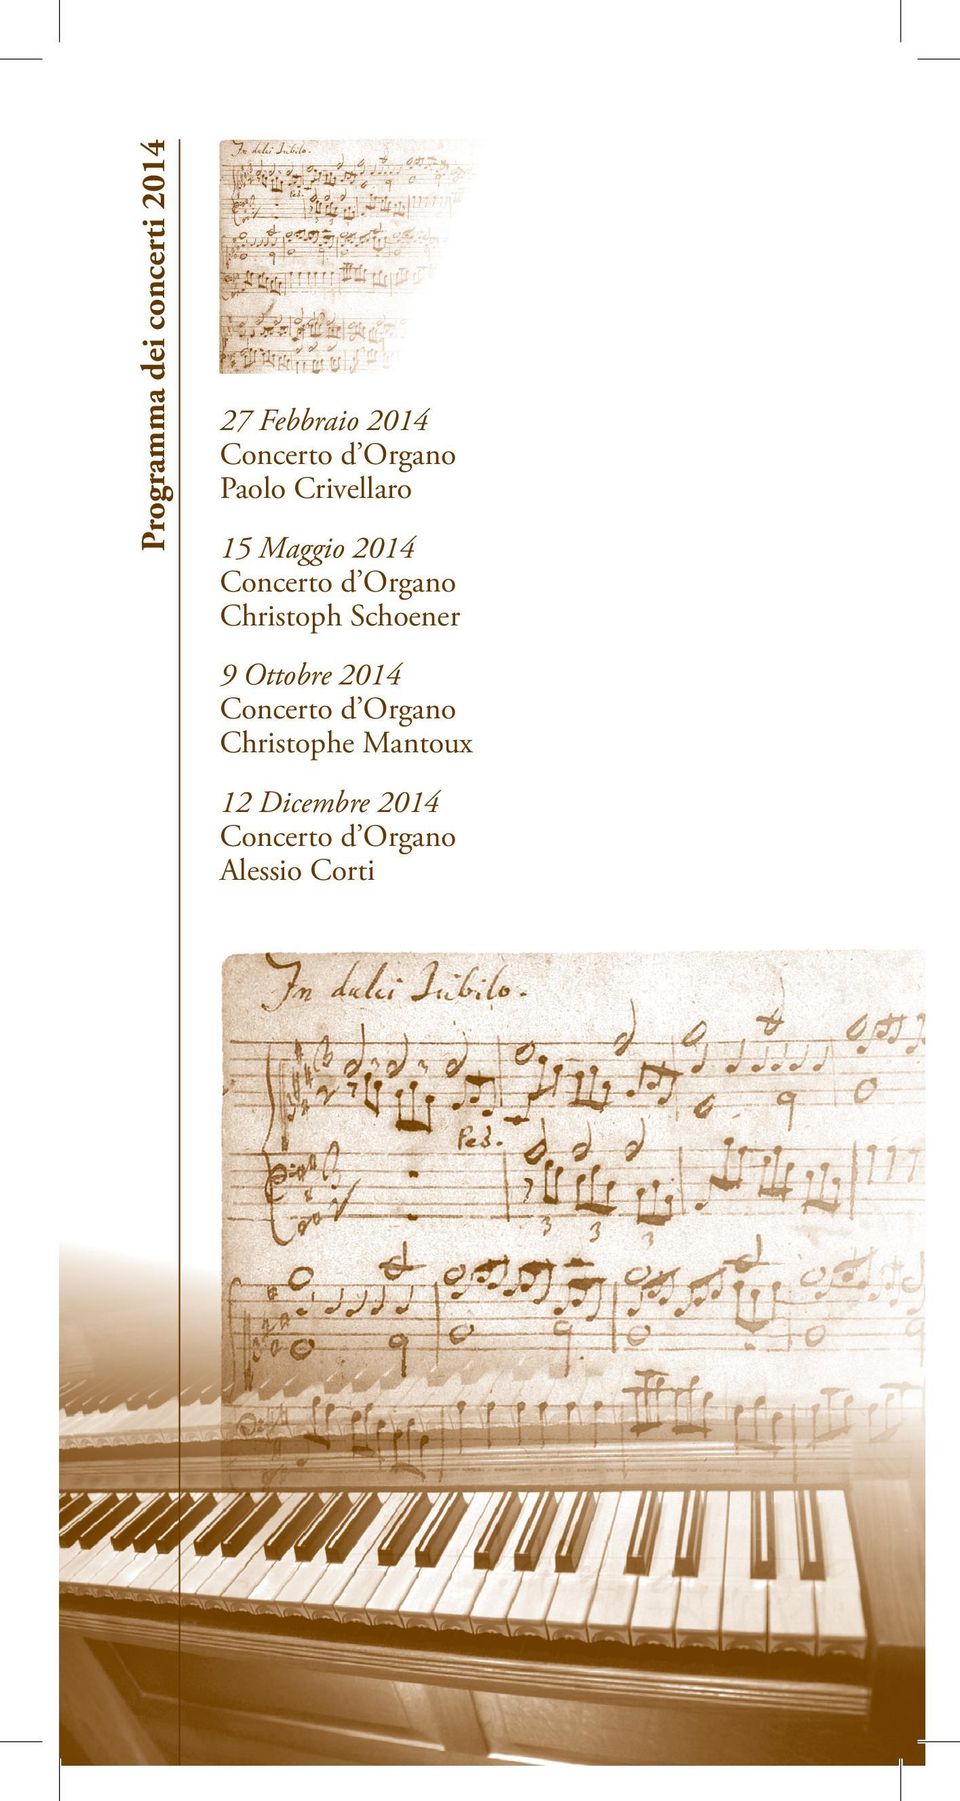 Christoph Schoener 9 Ottobre 2014 Concerto d Organo